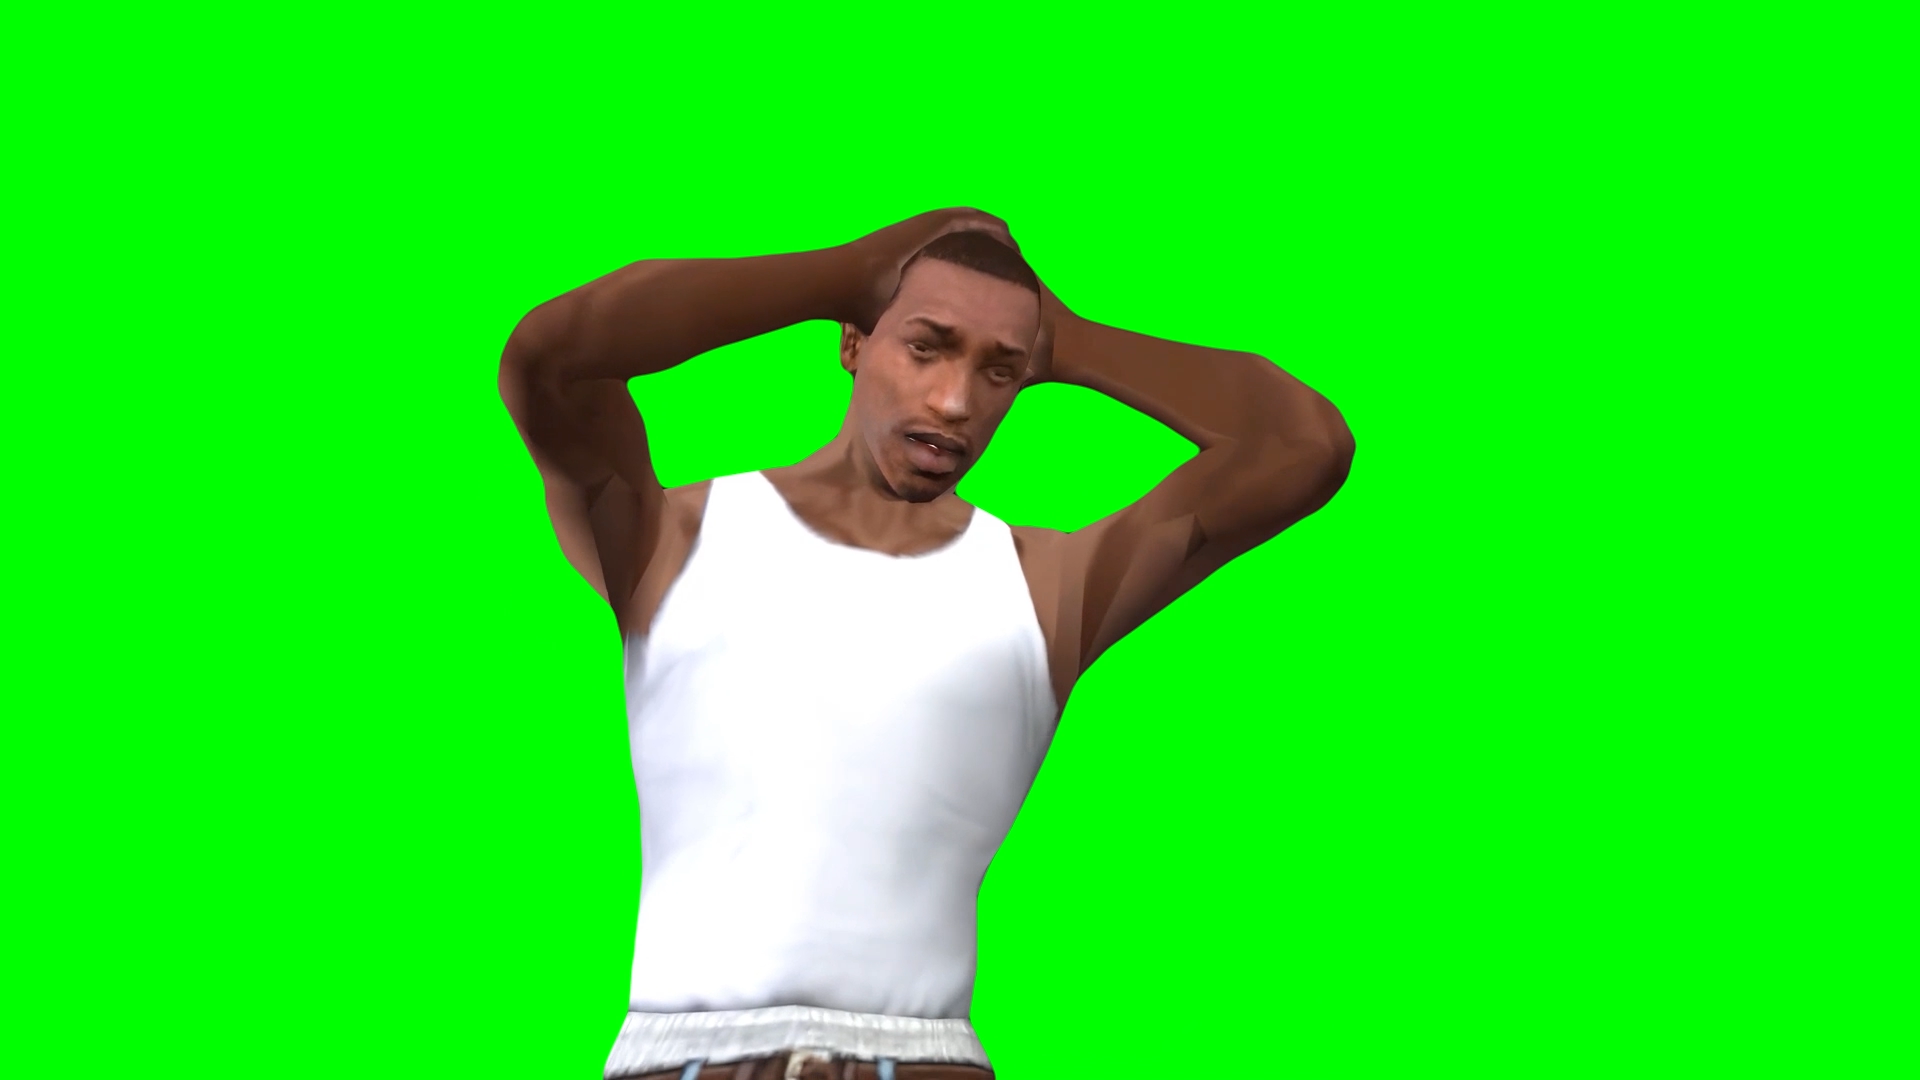 CJ Shocked hands on head meme - GTA San Andreas  (Green Screen)